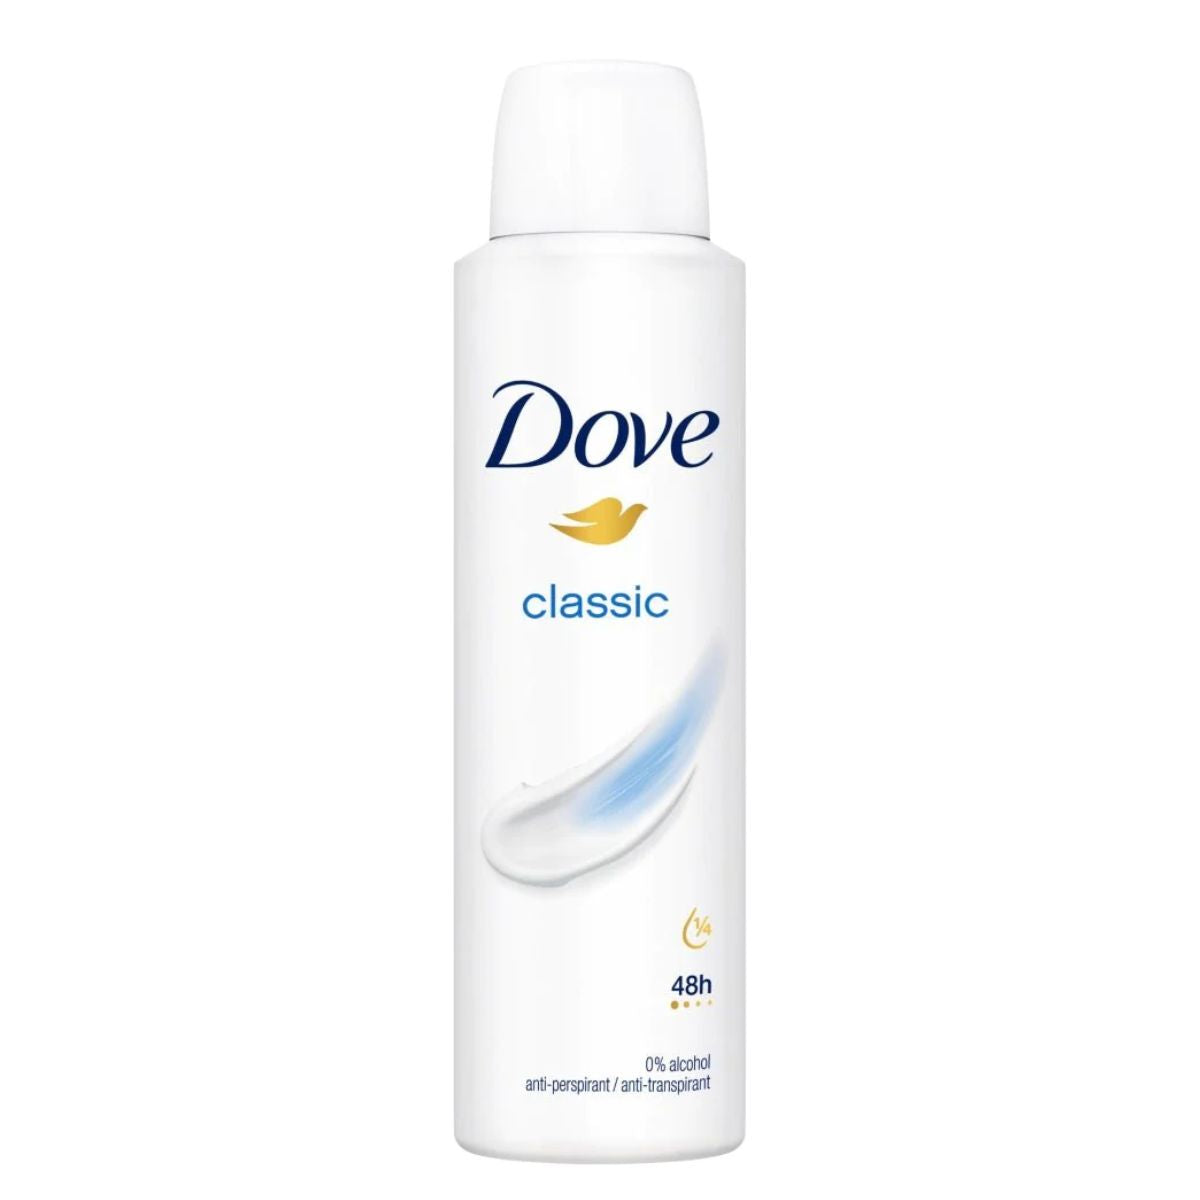 Dove Original Antiperspirant Aerosol Deodorant - 150ml spray on a white background.